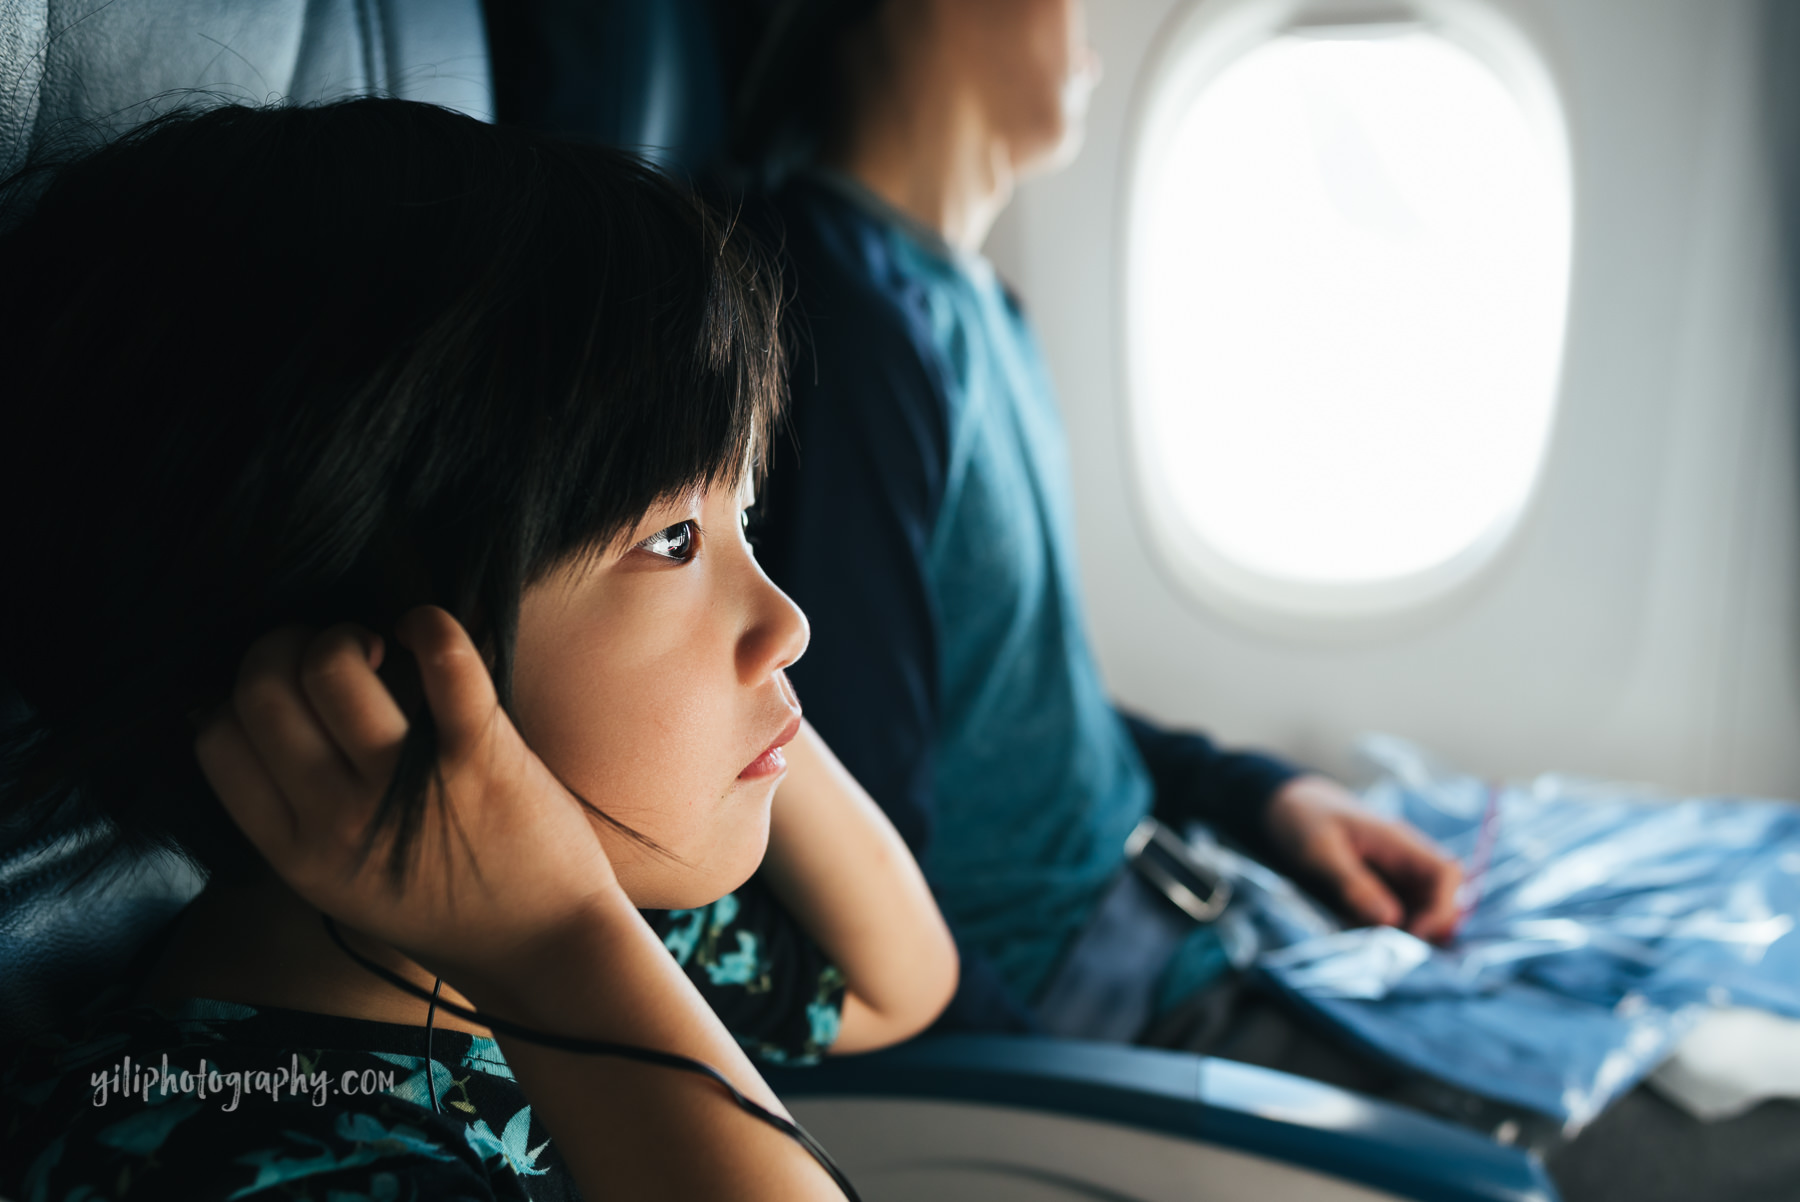 little girl on airplane holding headphones